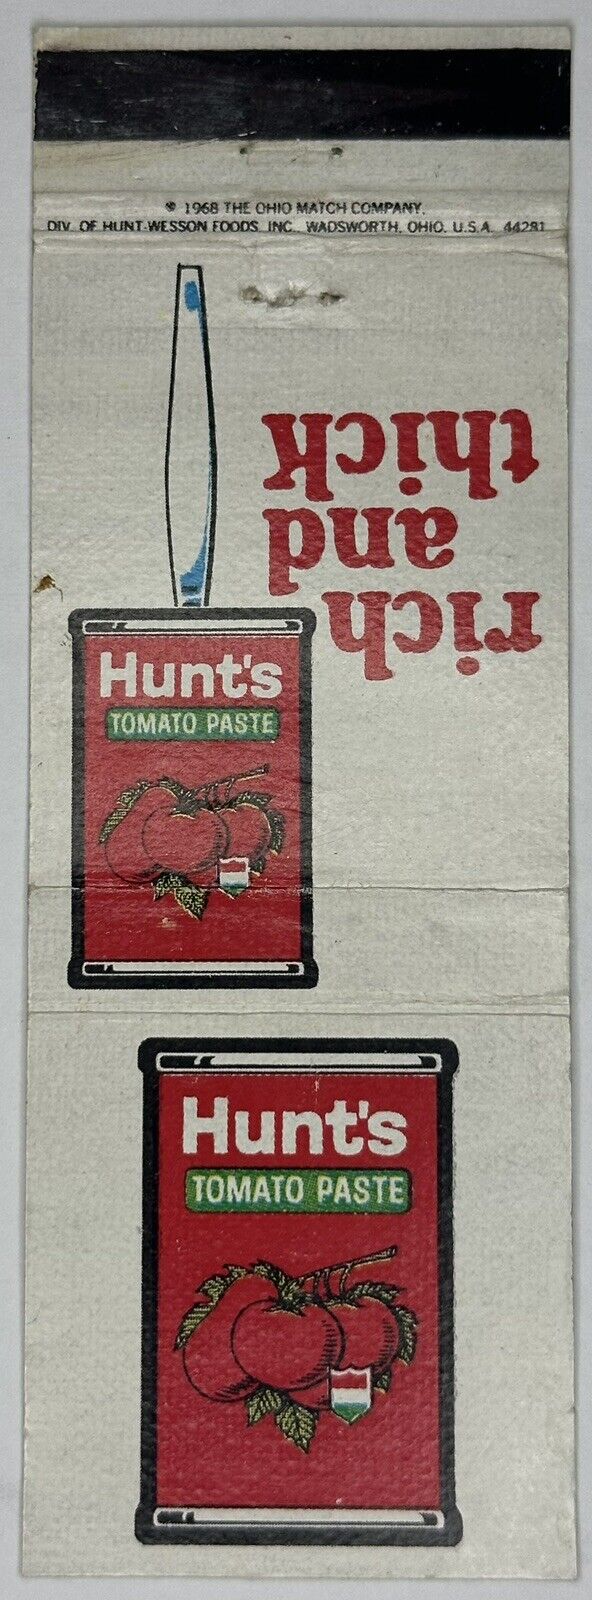 Vintage Matchbook Cover / Hunts Tomato Paste/ Advertisement / 1968